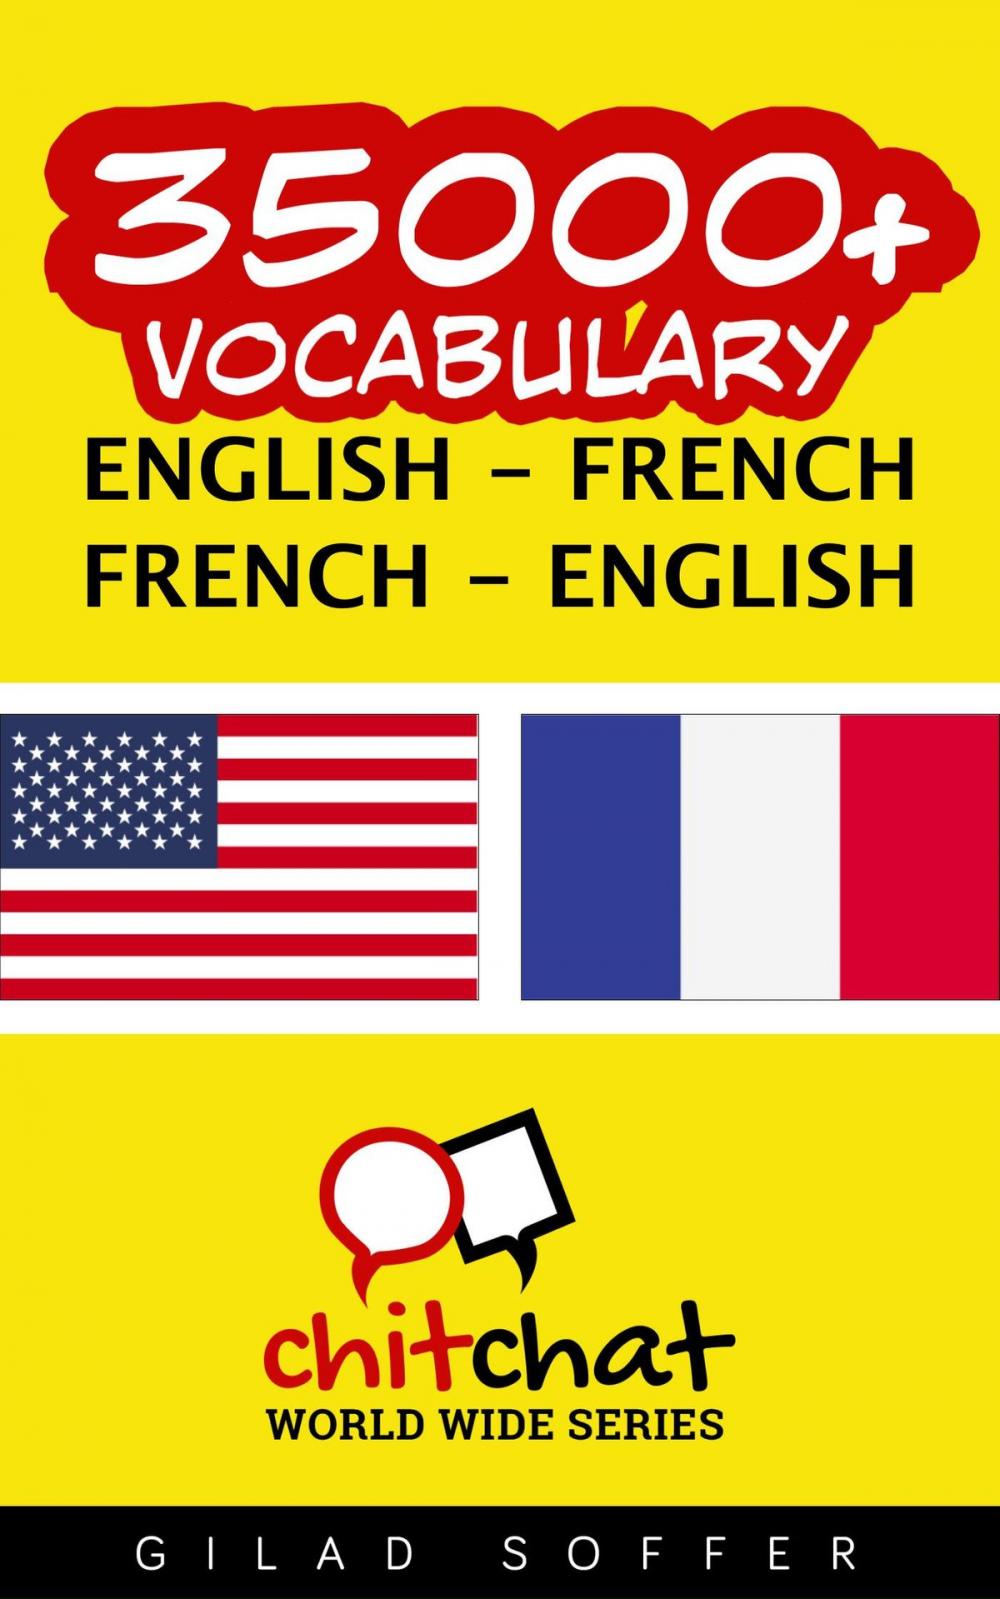 Big bigCover of 35000+ Vocabulary English - French